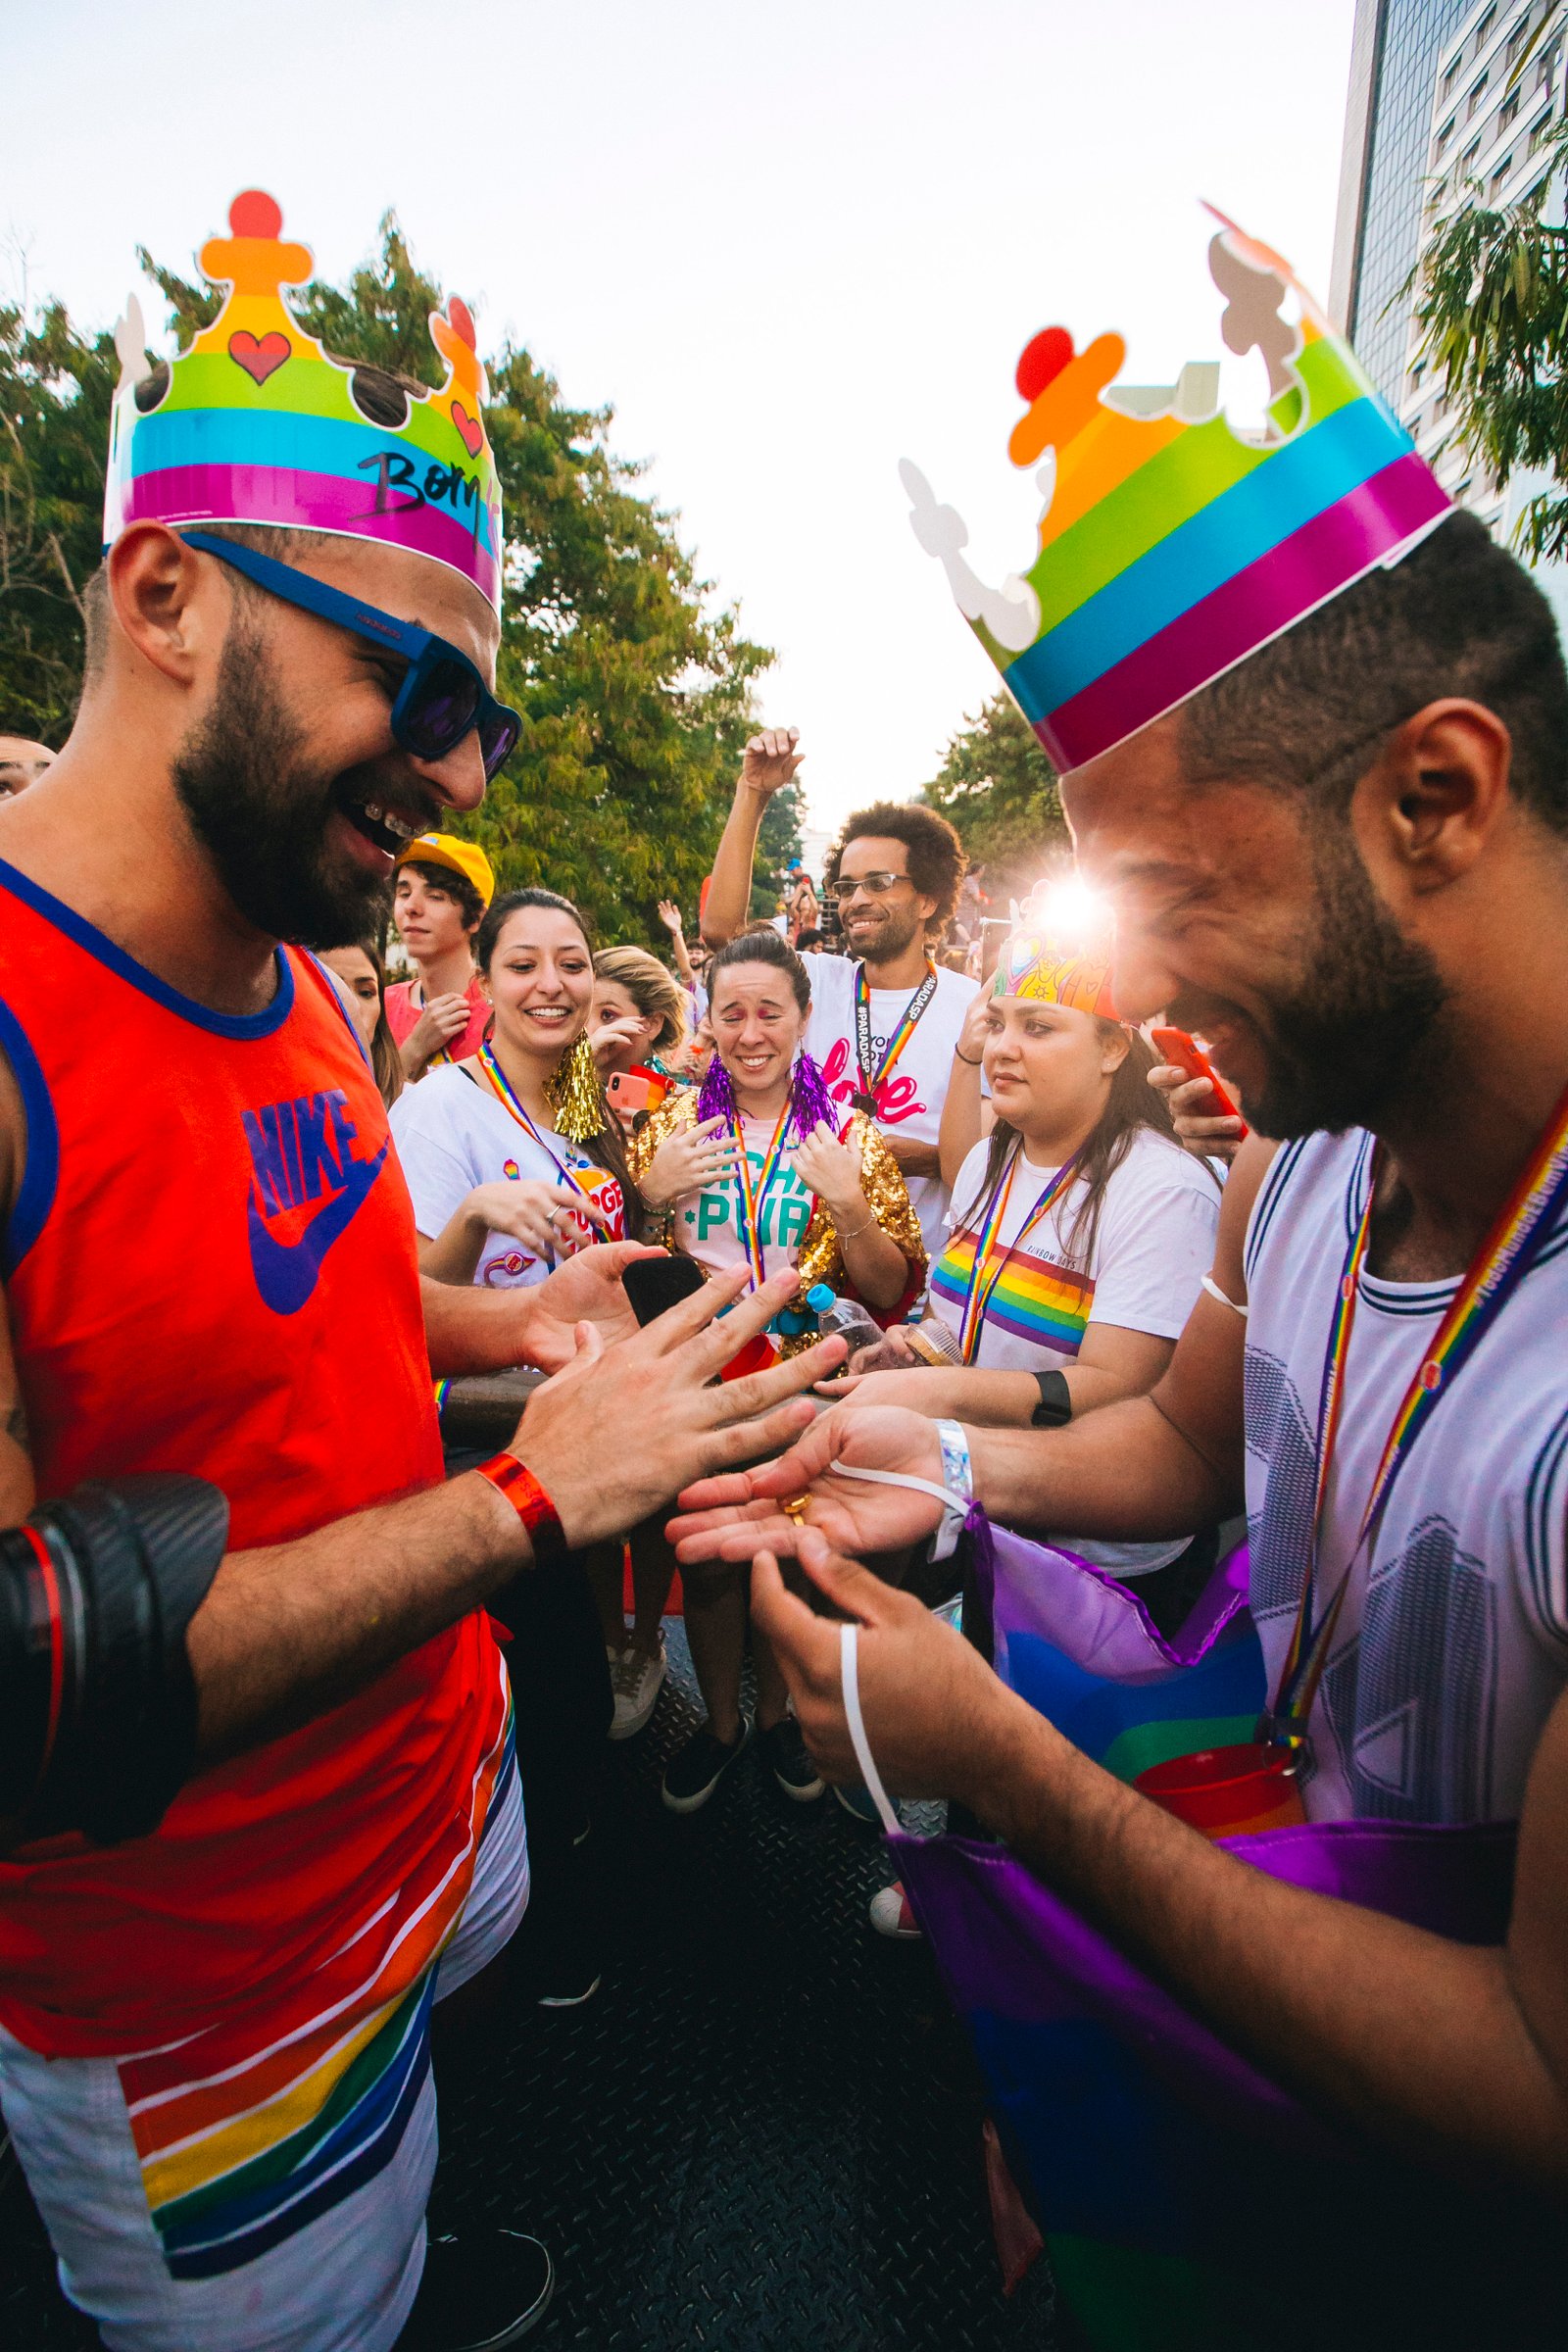 Burger King na Parada LGBT 2019. Foto: Lana Pinho